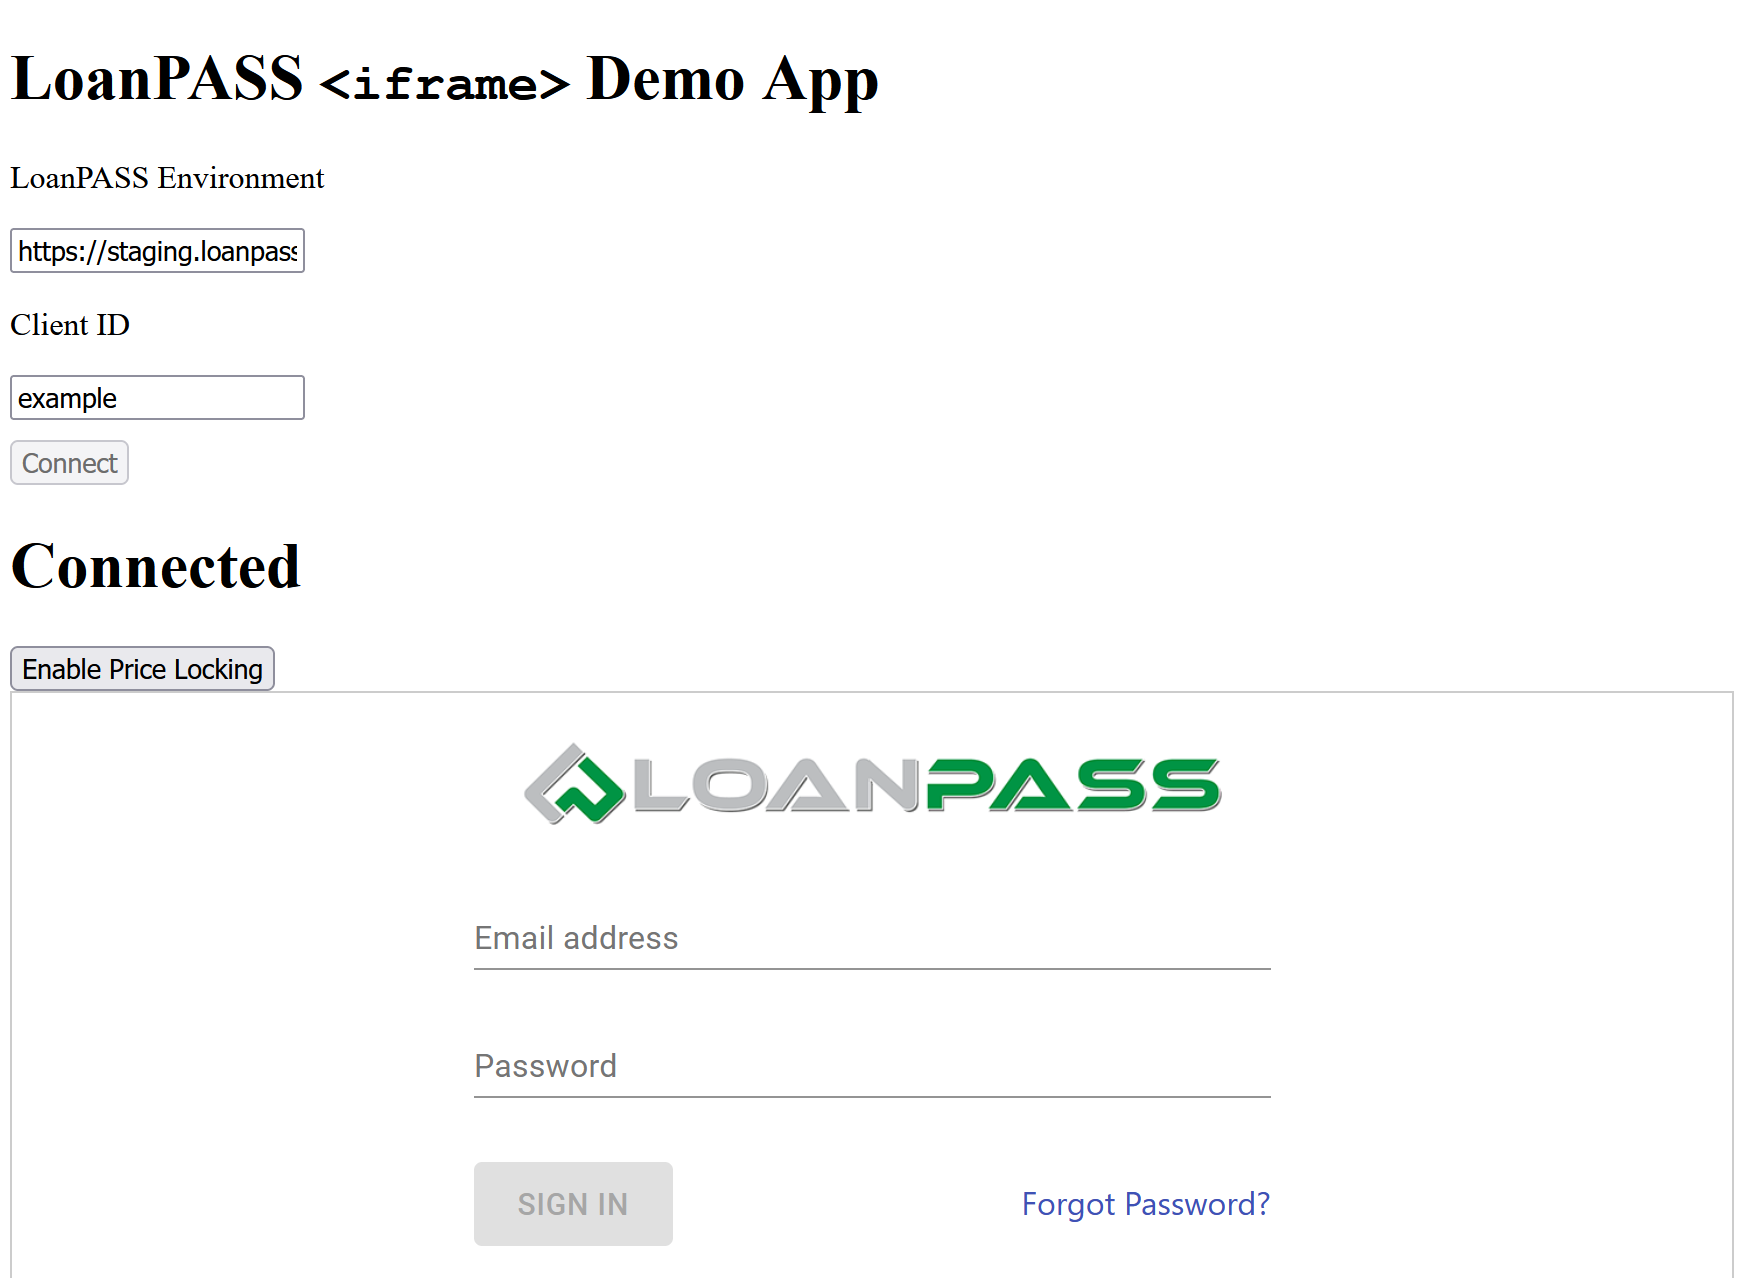 "LoanPASS <iframe> Demo App"